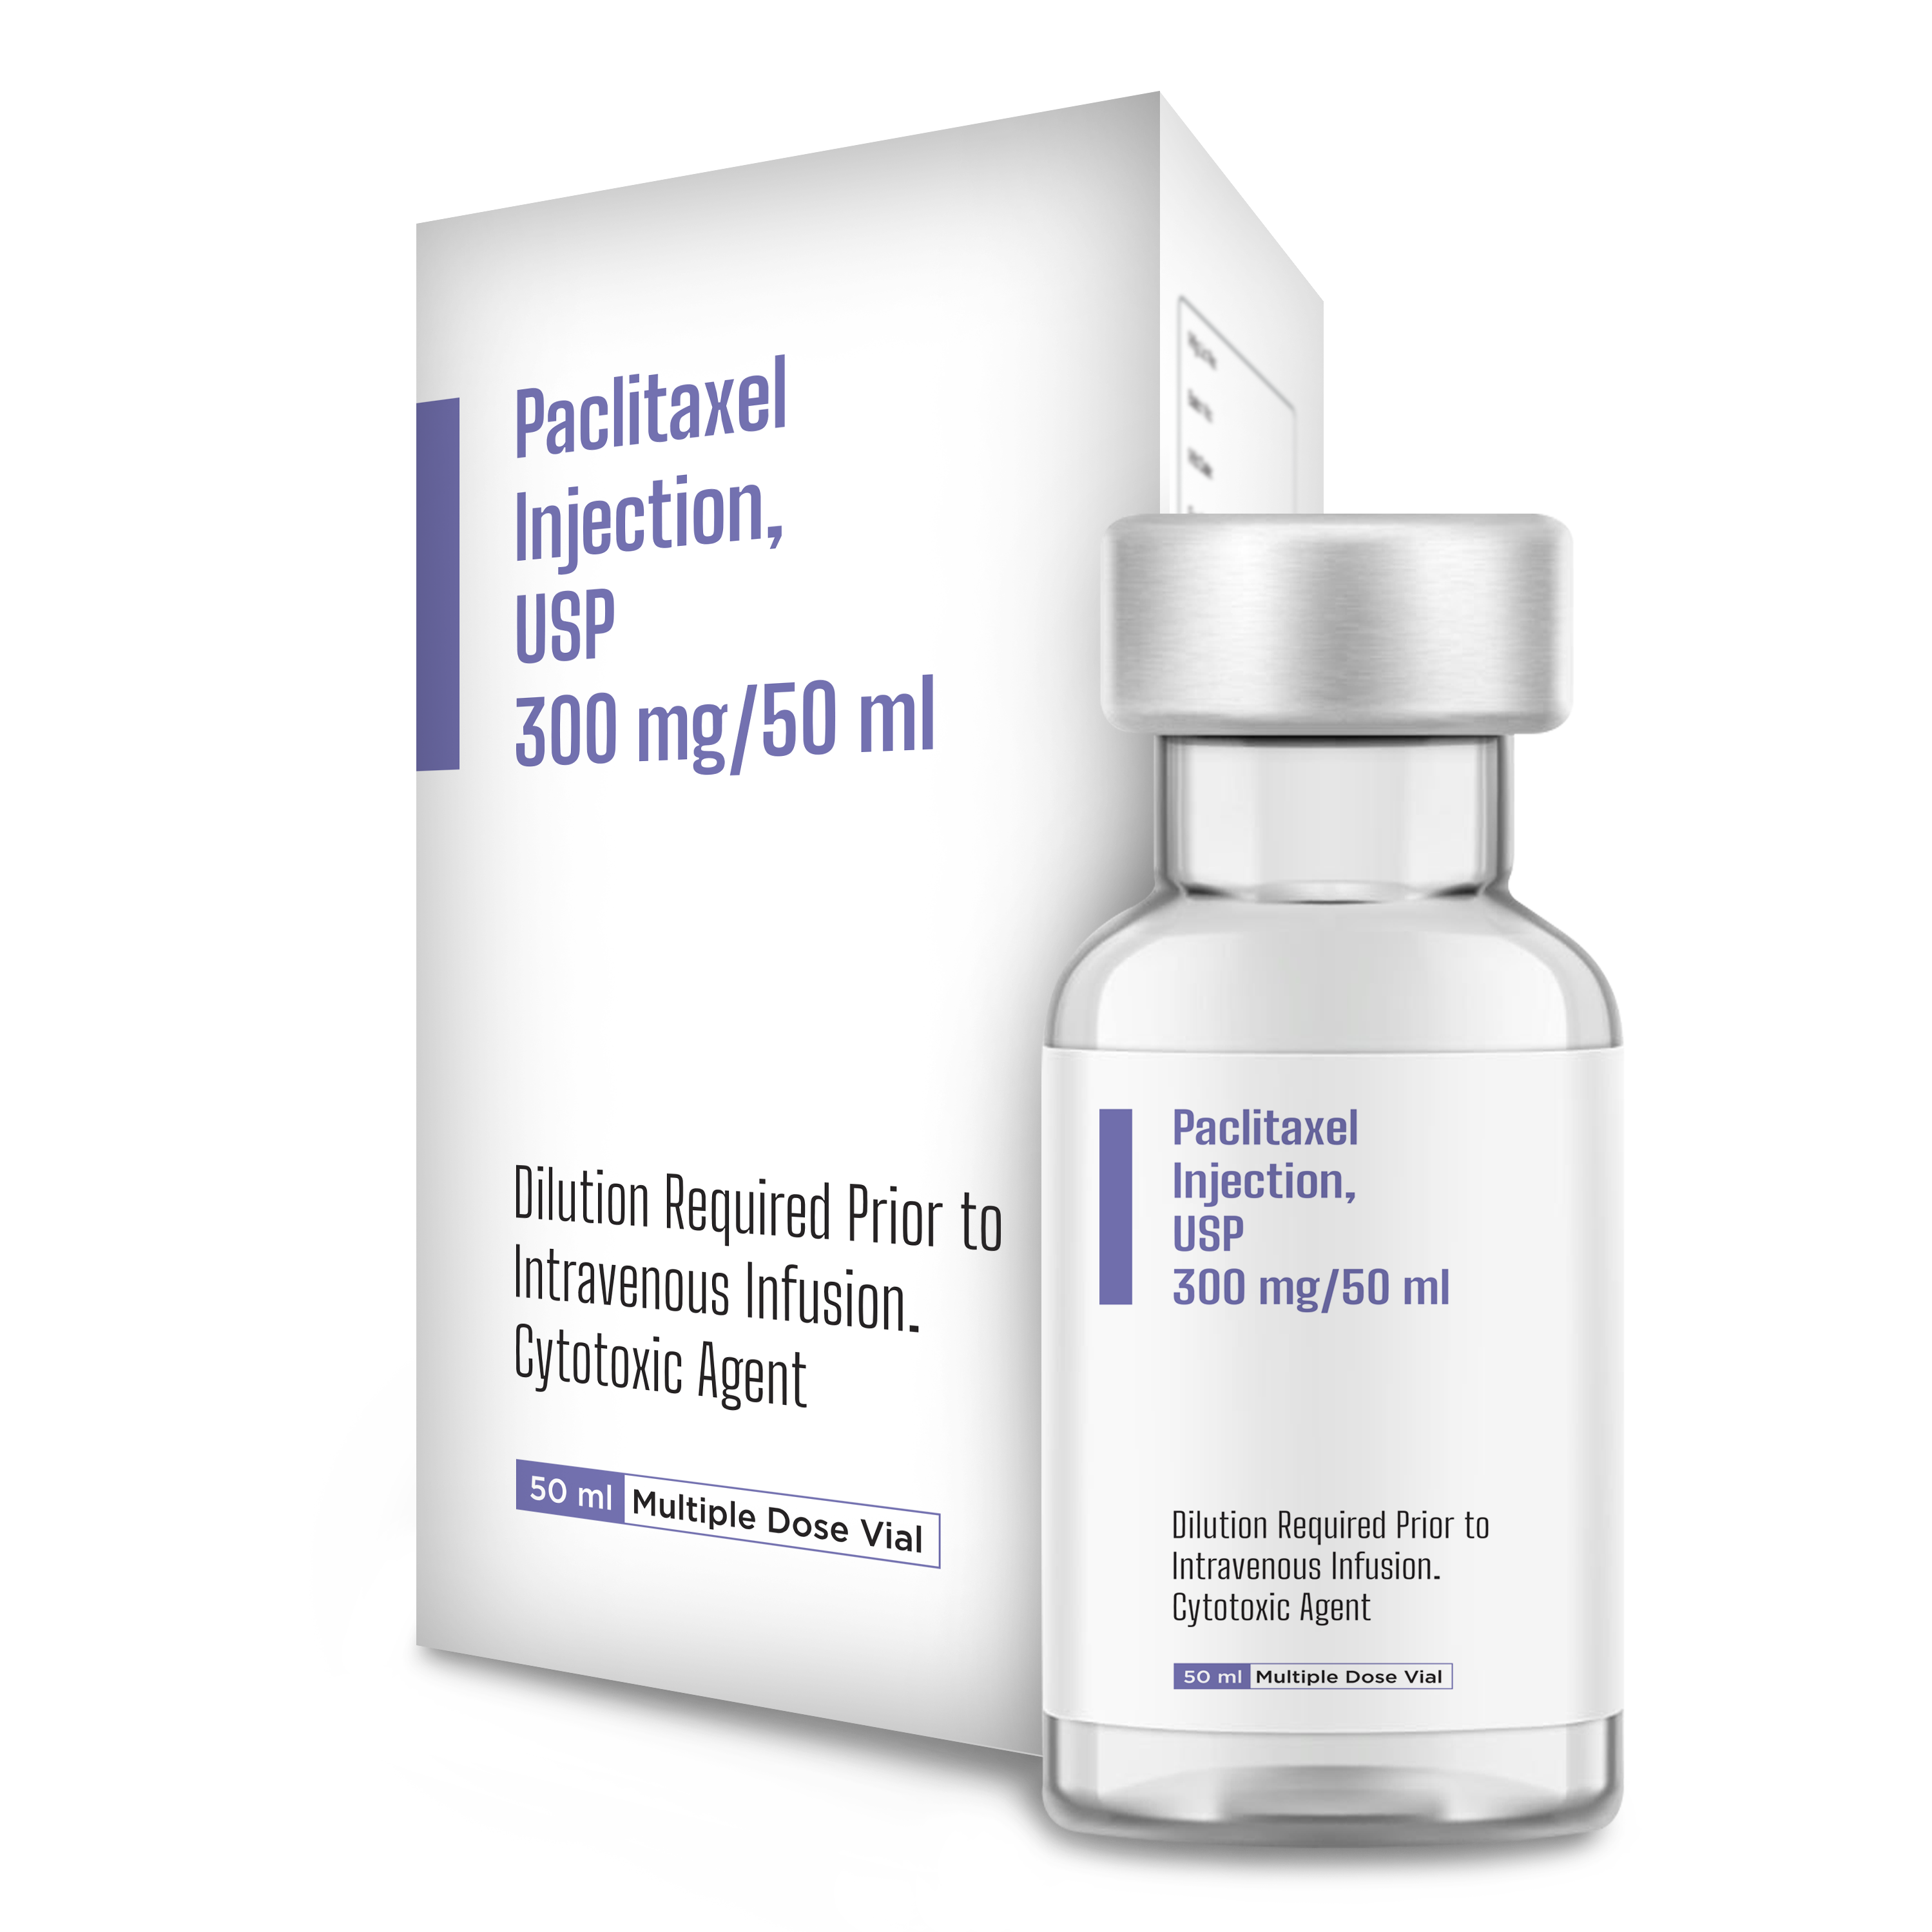 Paclitaxel Injection, 300 mg/50 ml